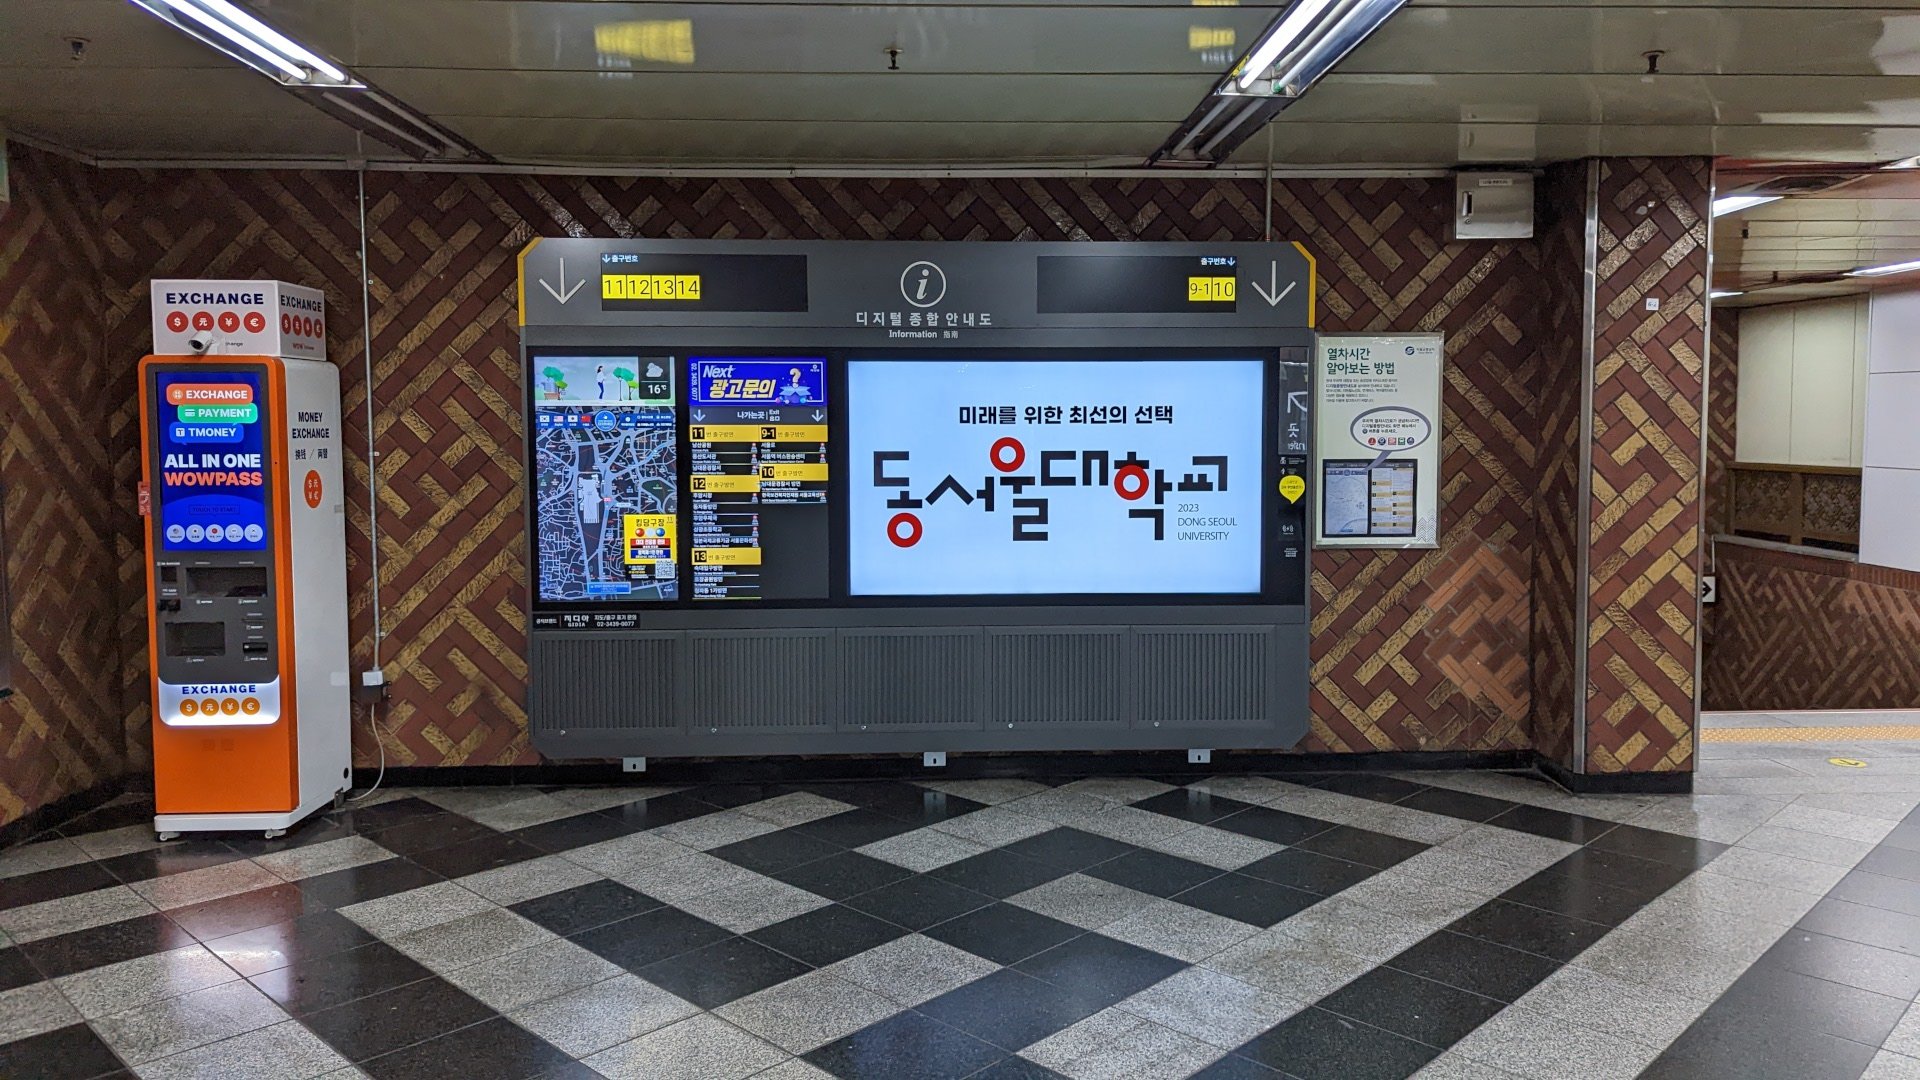 Samsung Digital Signage and DooH at Seoul Metro (Photo: invidis)